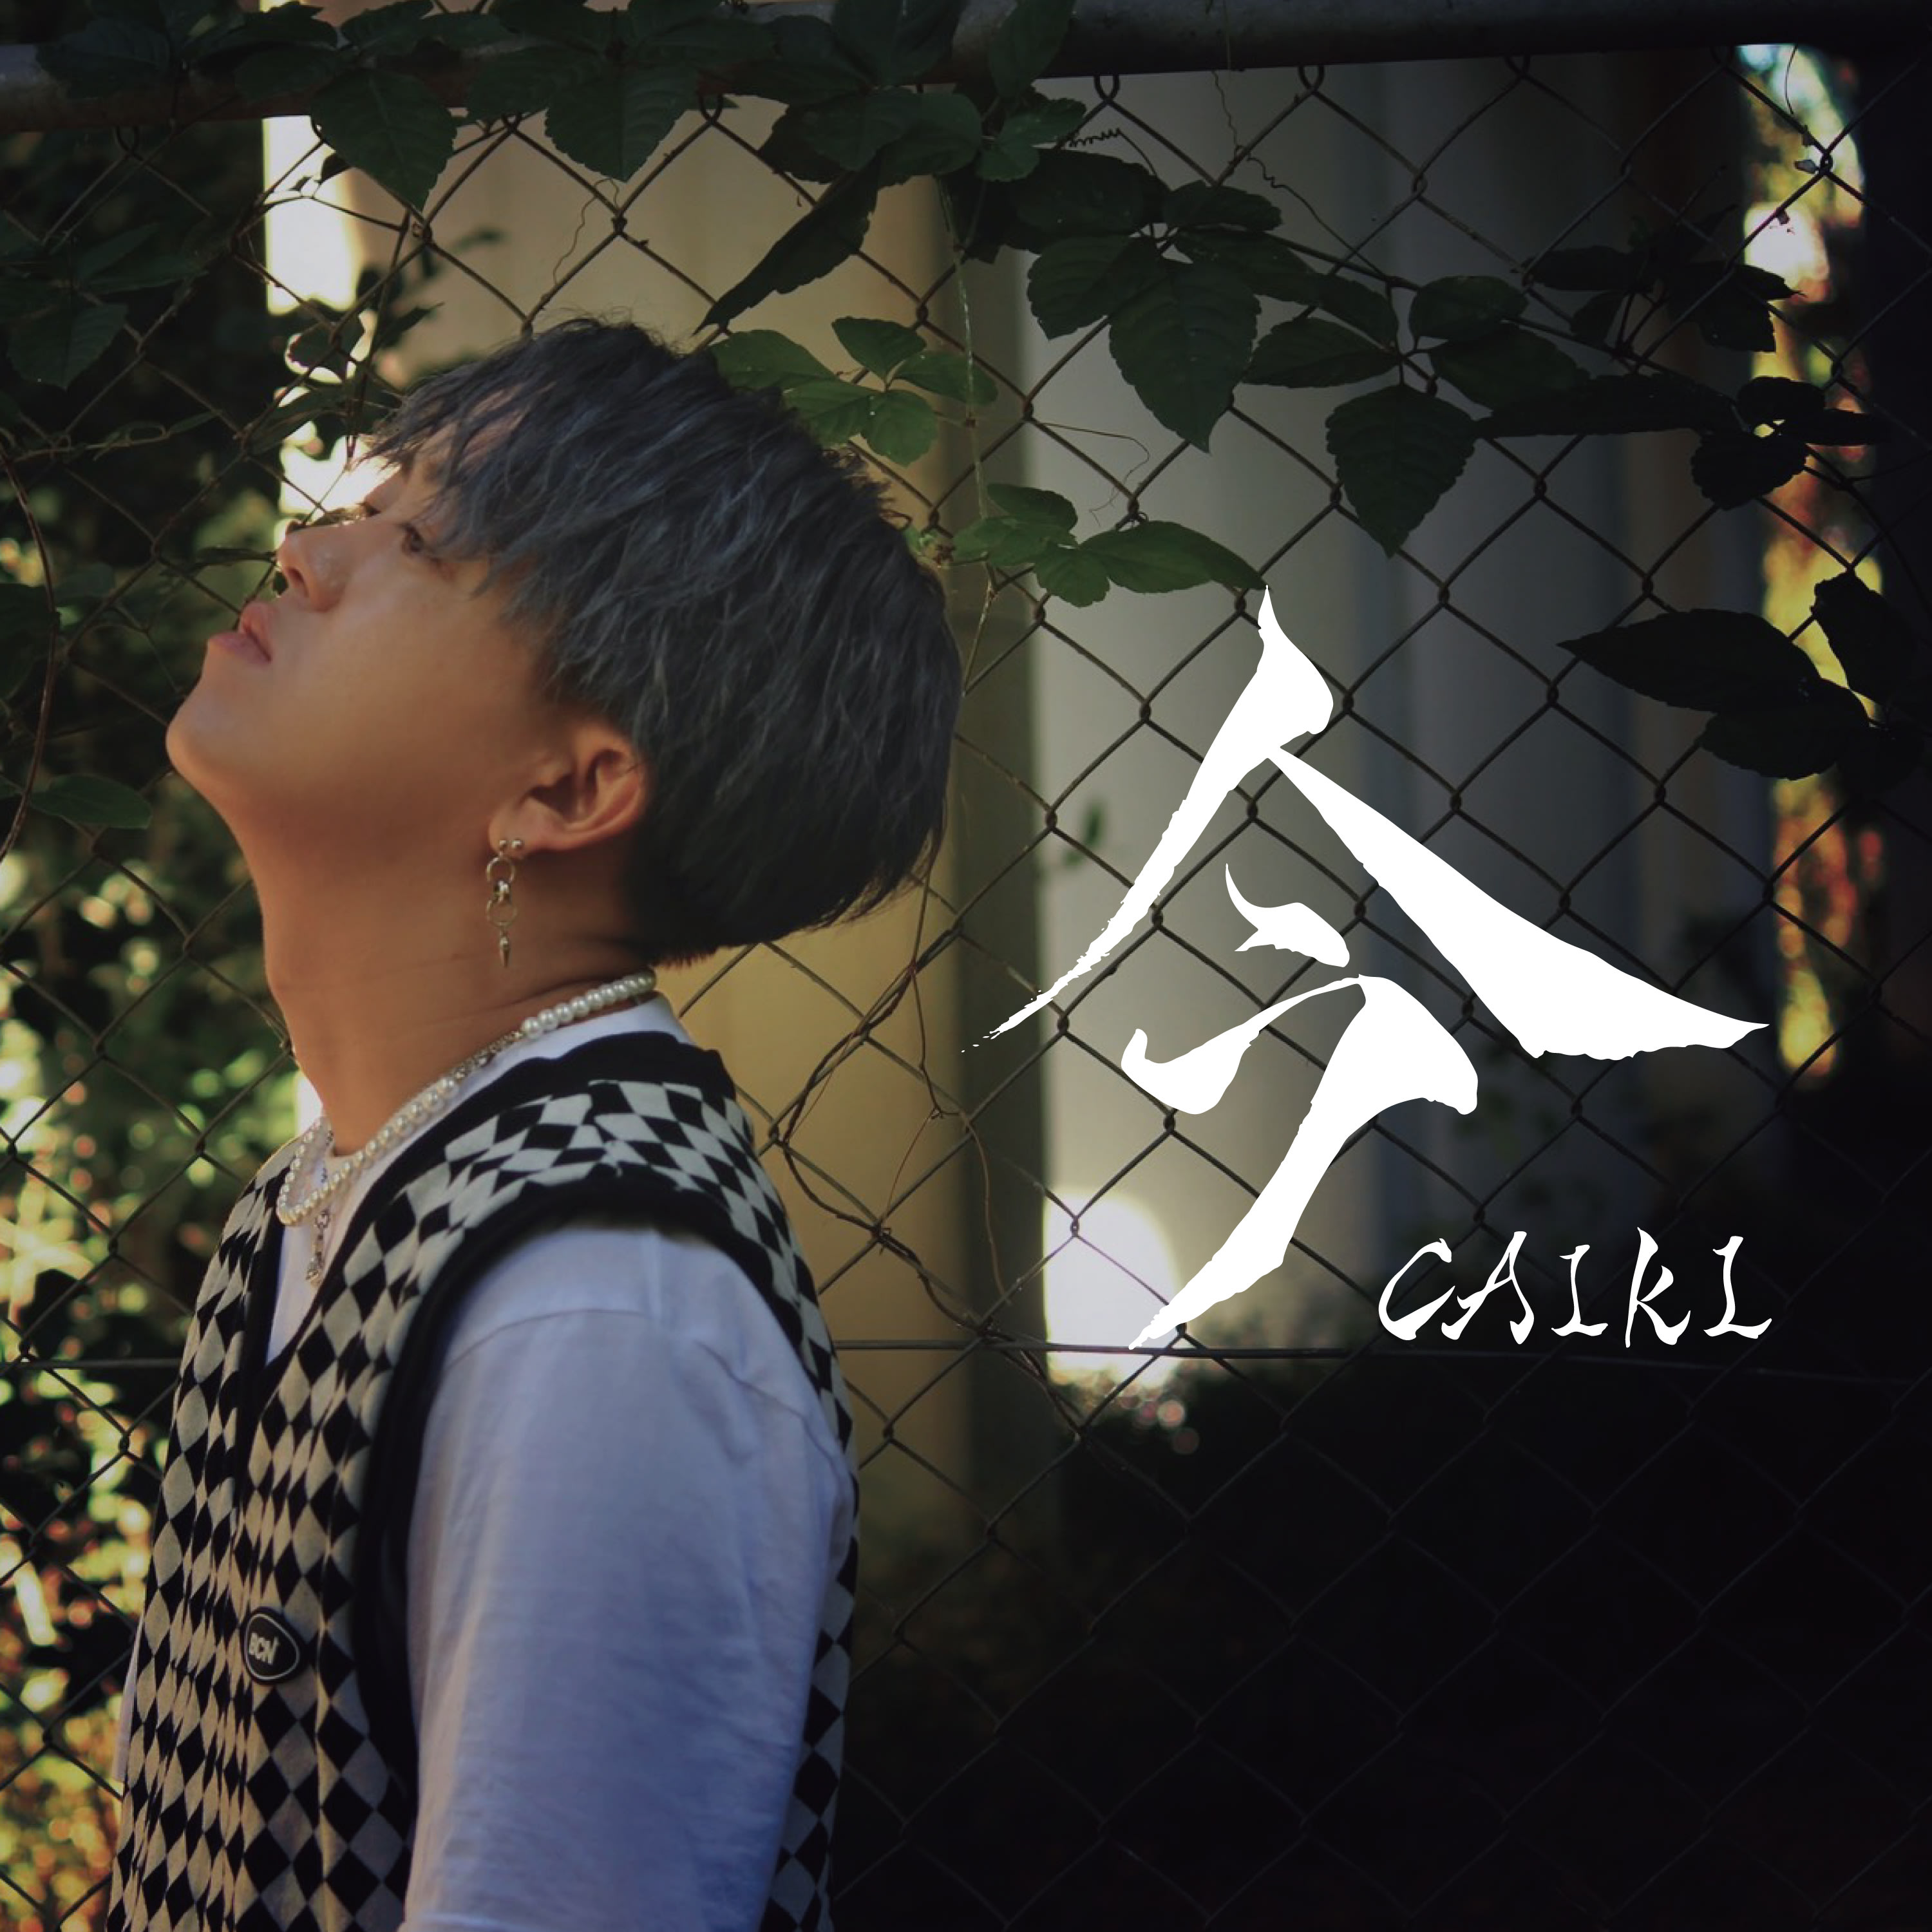 CAIKI ニューアルバム「今」の画像